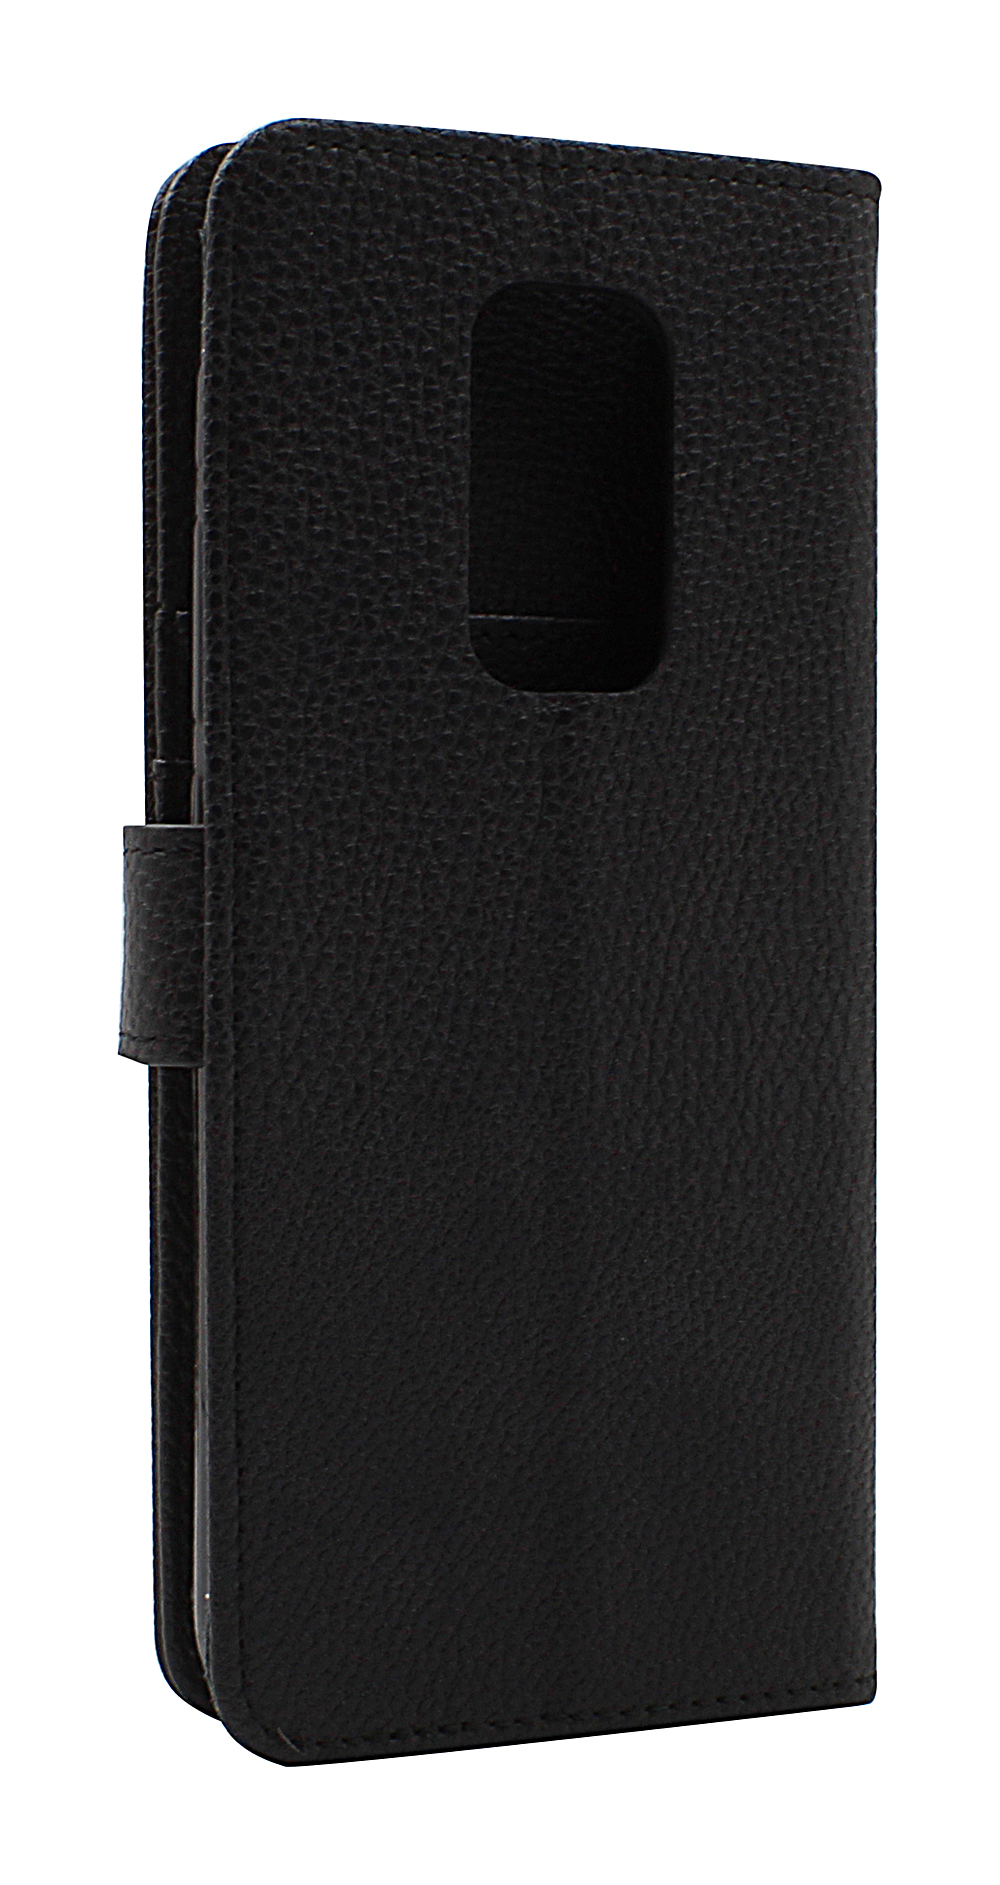 billigamobilskydd.seNew Standcase Wallet Motorola Moto E7 Plus